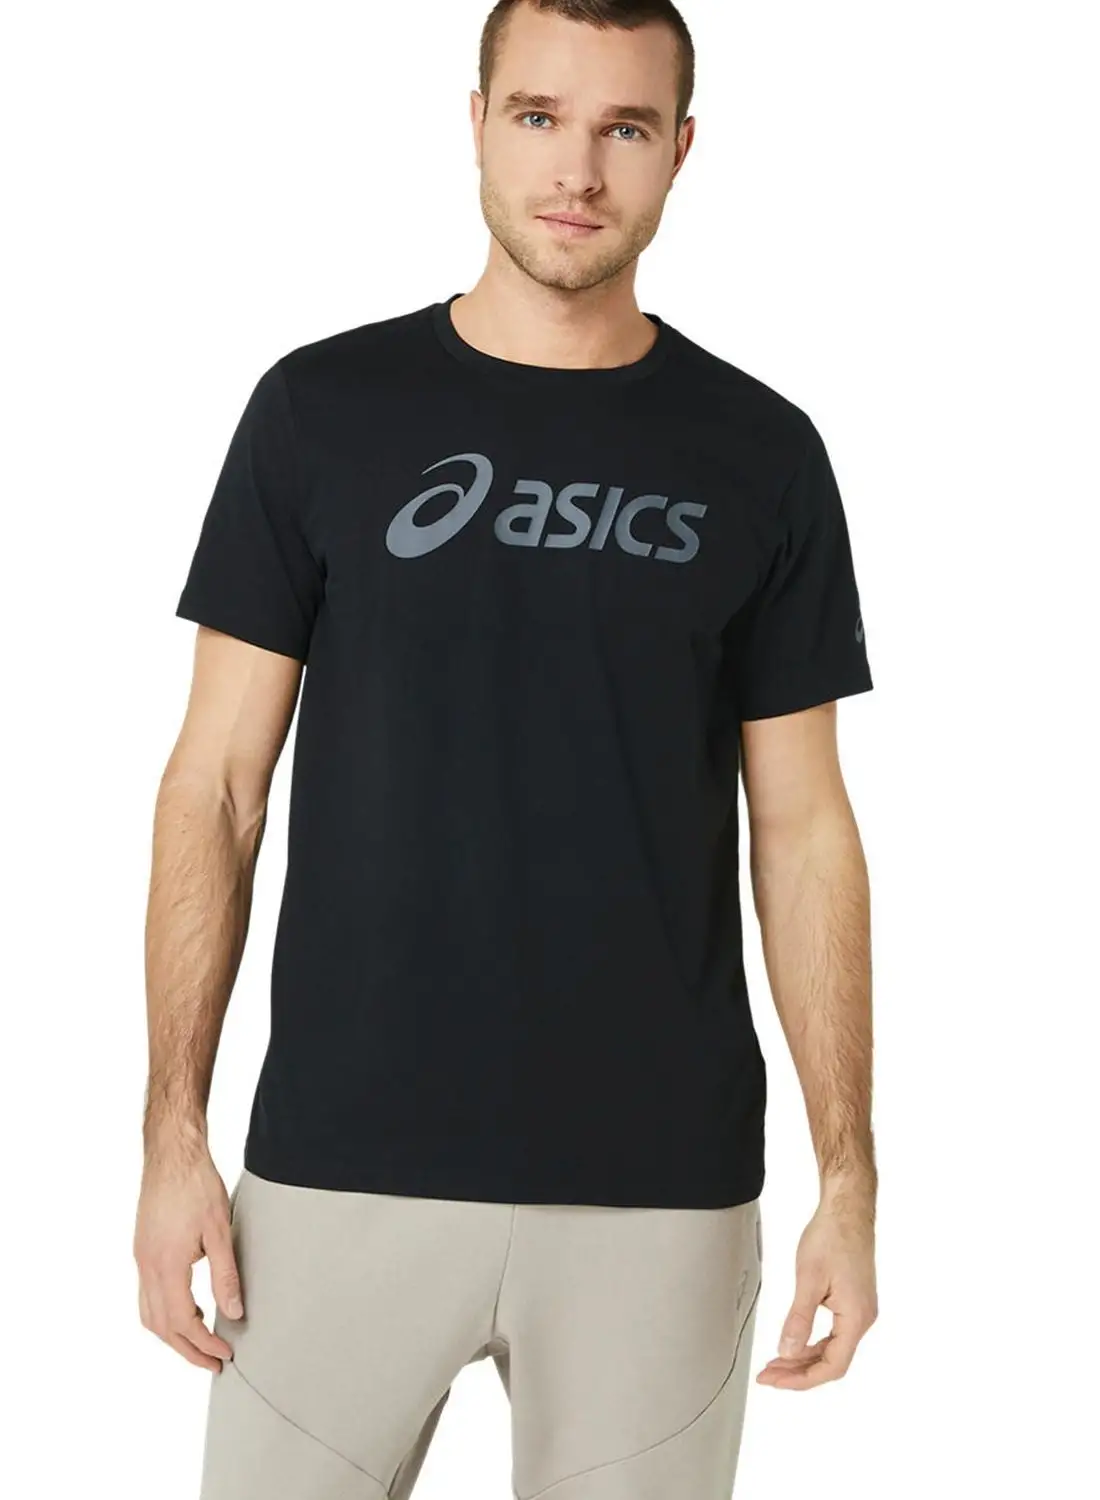 asics Logo T-Shirt